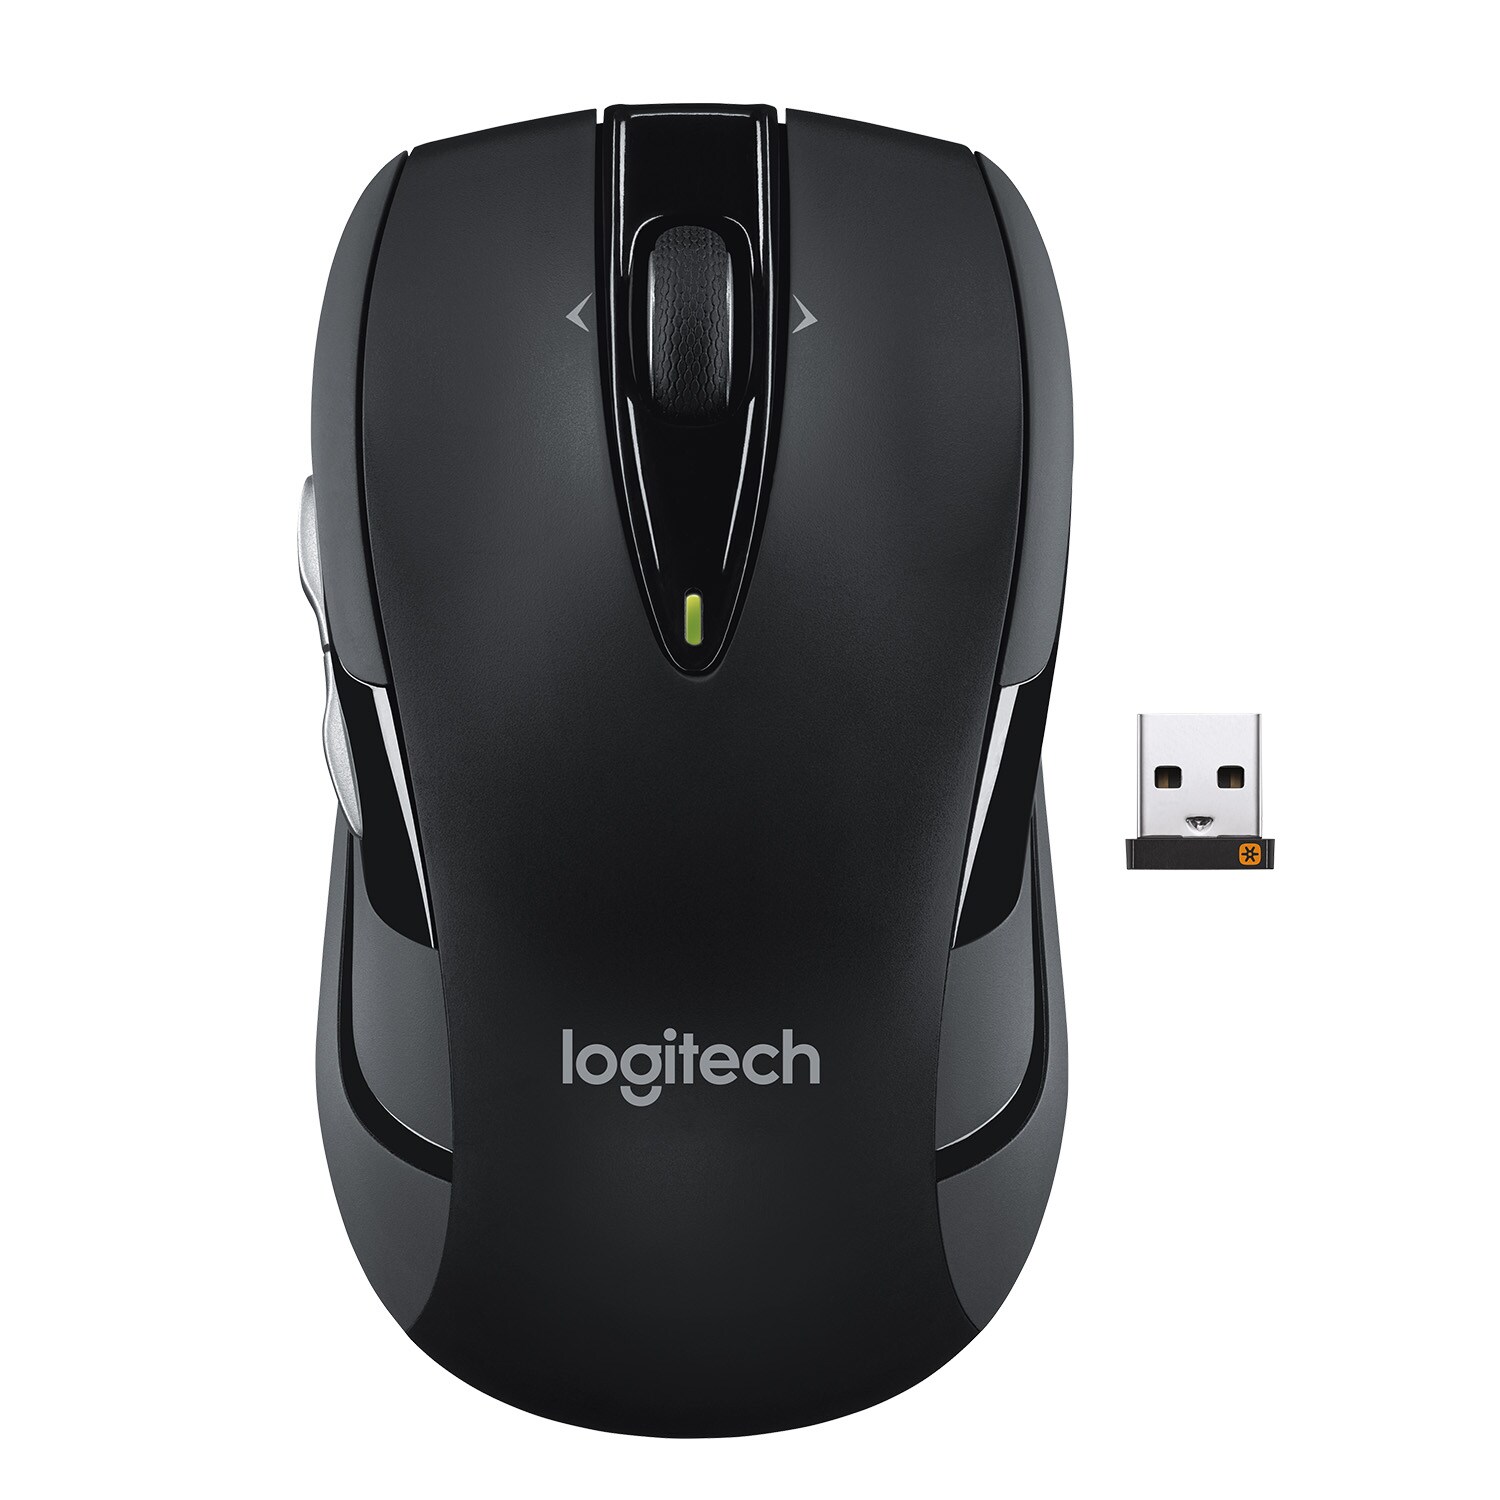 Logitech M545 trådløs mus (sort) - Computermus - Elgiganten